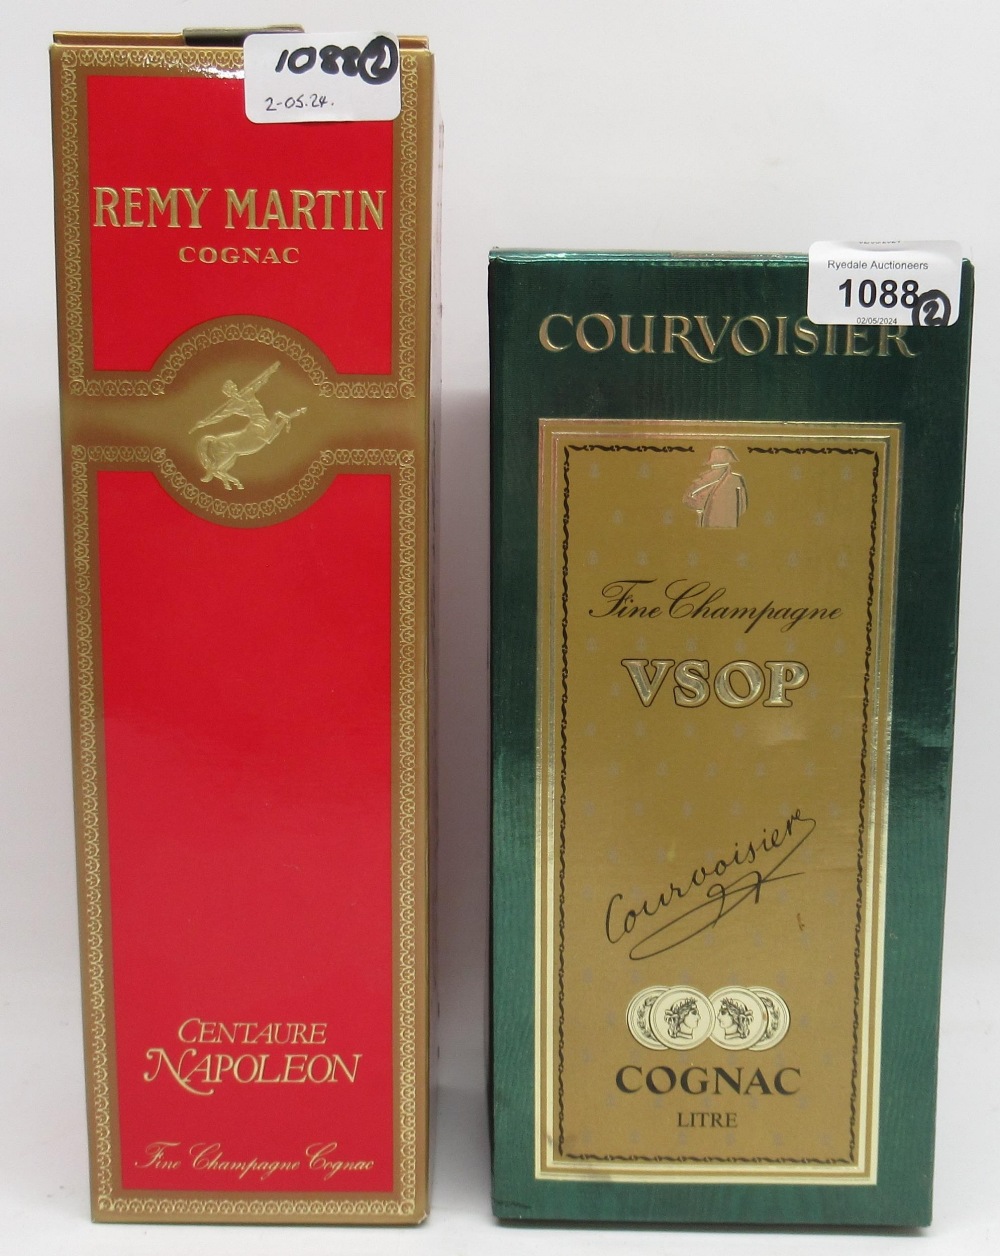 Courvoisier Fine Champagne V.S.O.P. cognac, 40% 1 litre bottle and Remy Martin Fine Champagne cognac